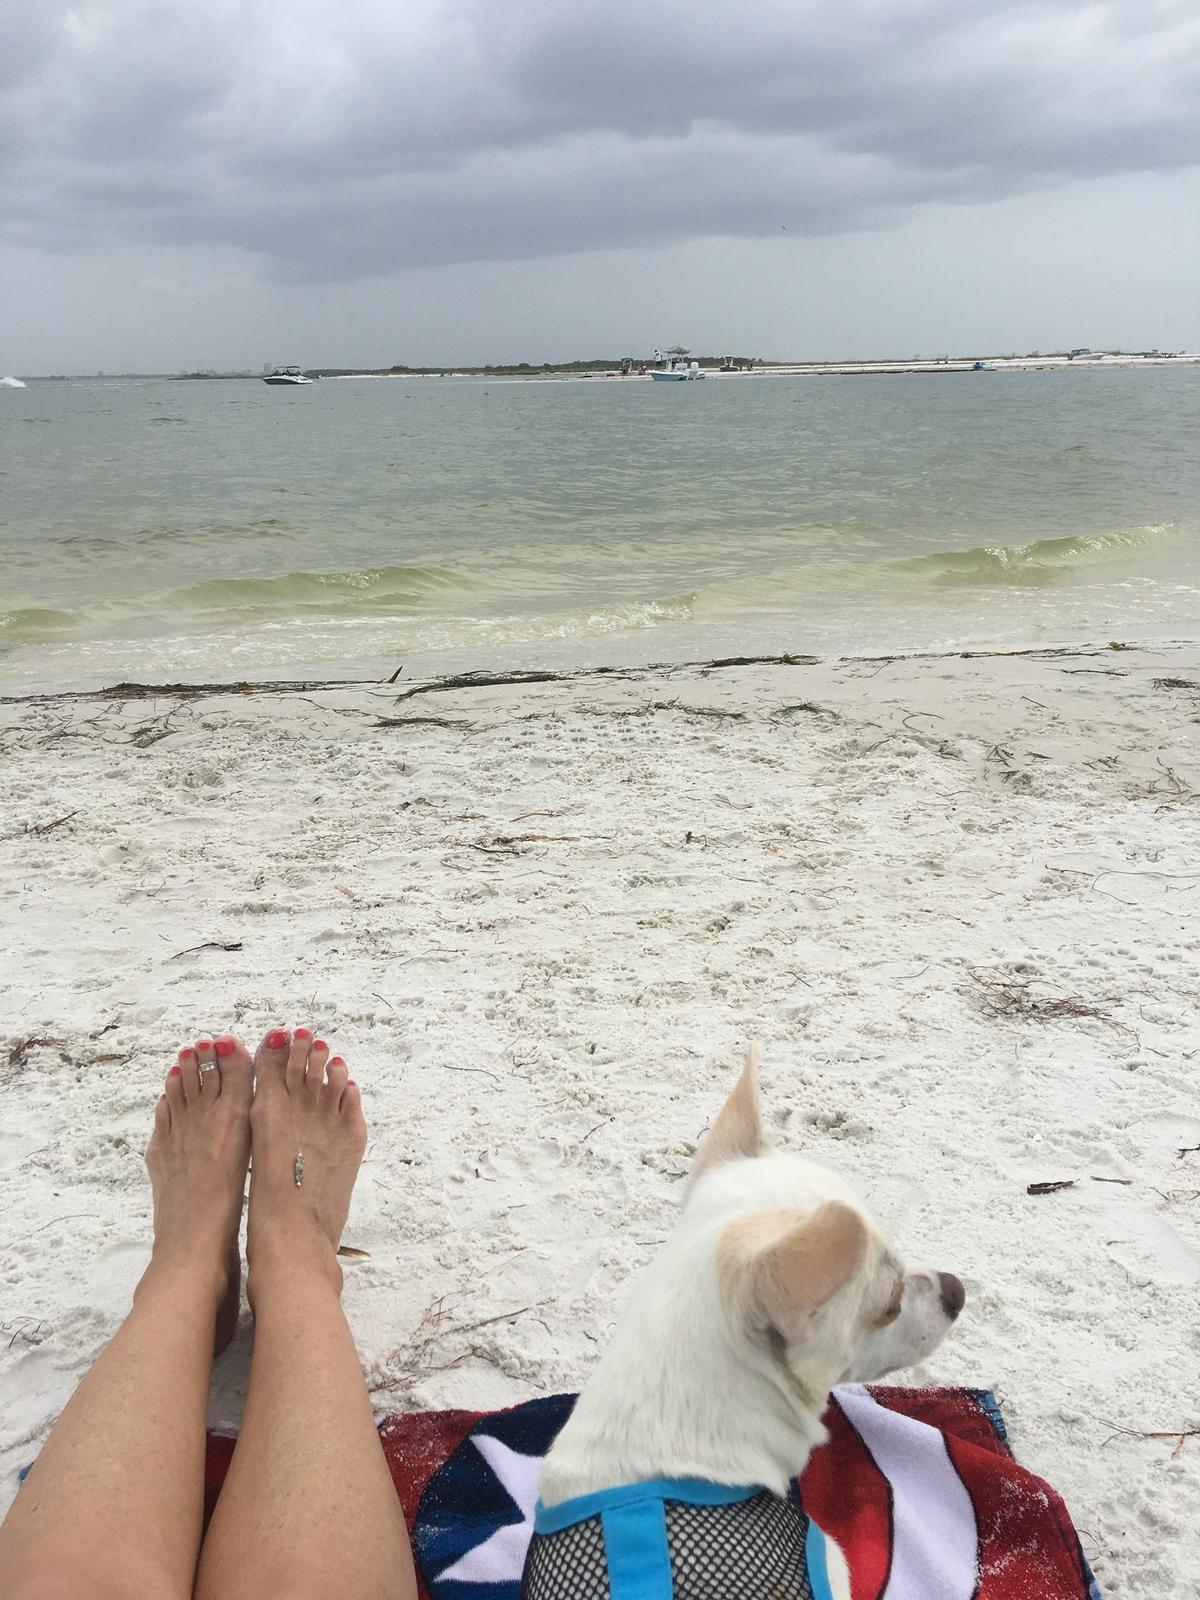 can dogs go to honeymoon island